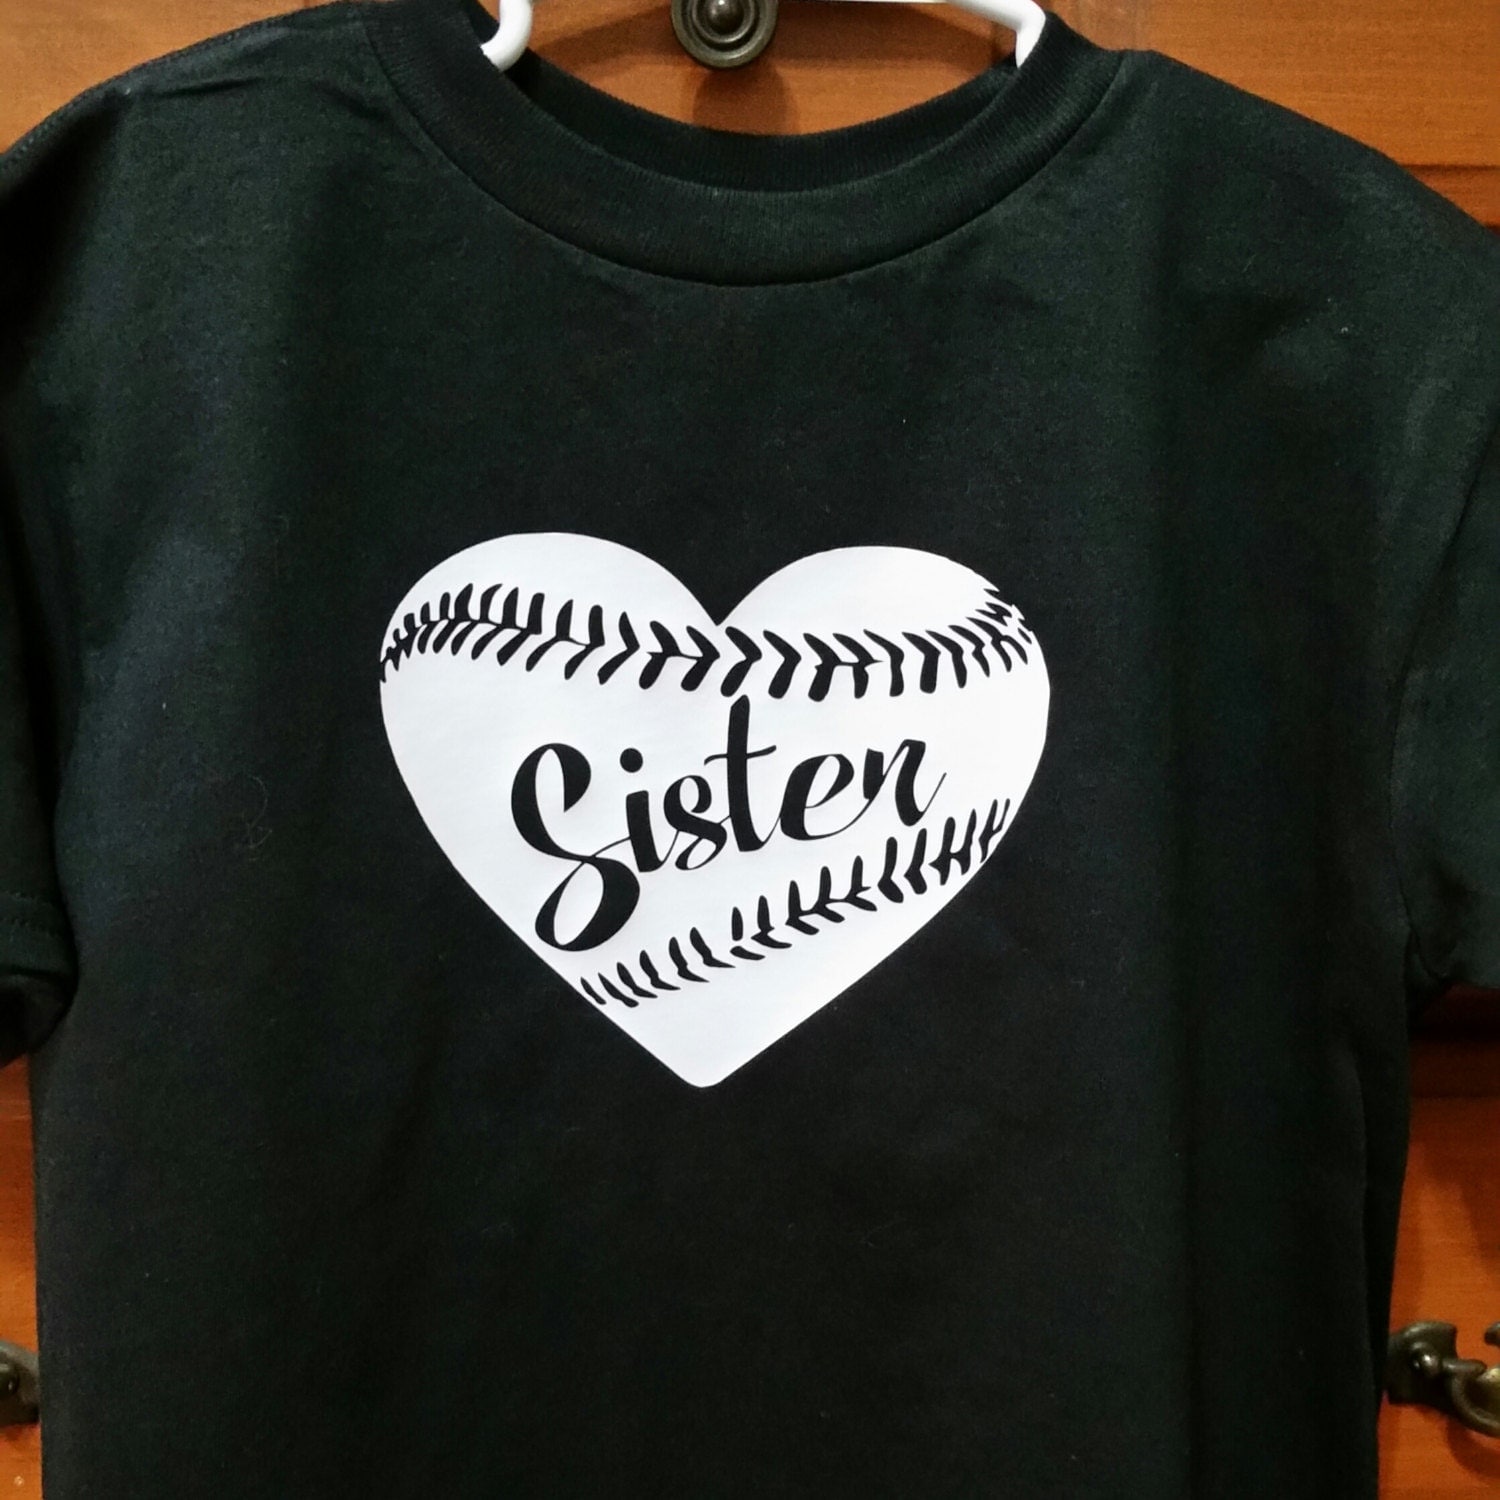 Baseball Sister/Softball Sister T-shirt by WoodlandEssentials